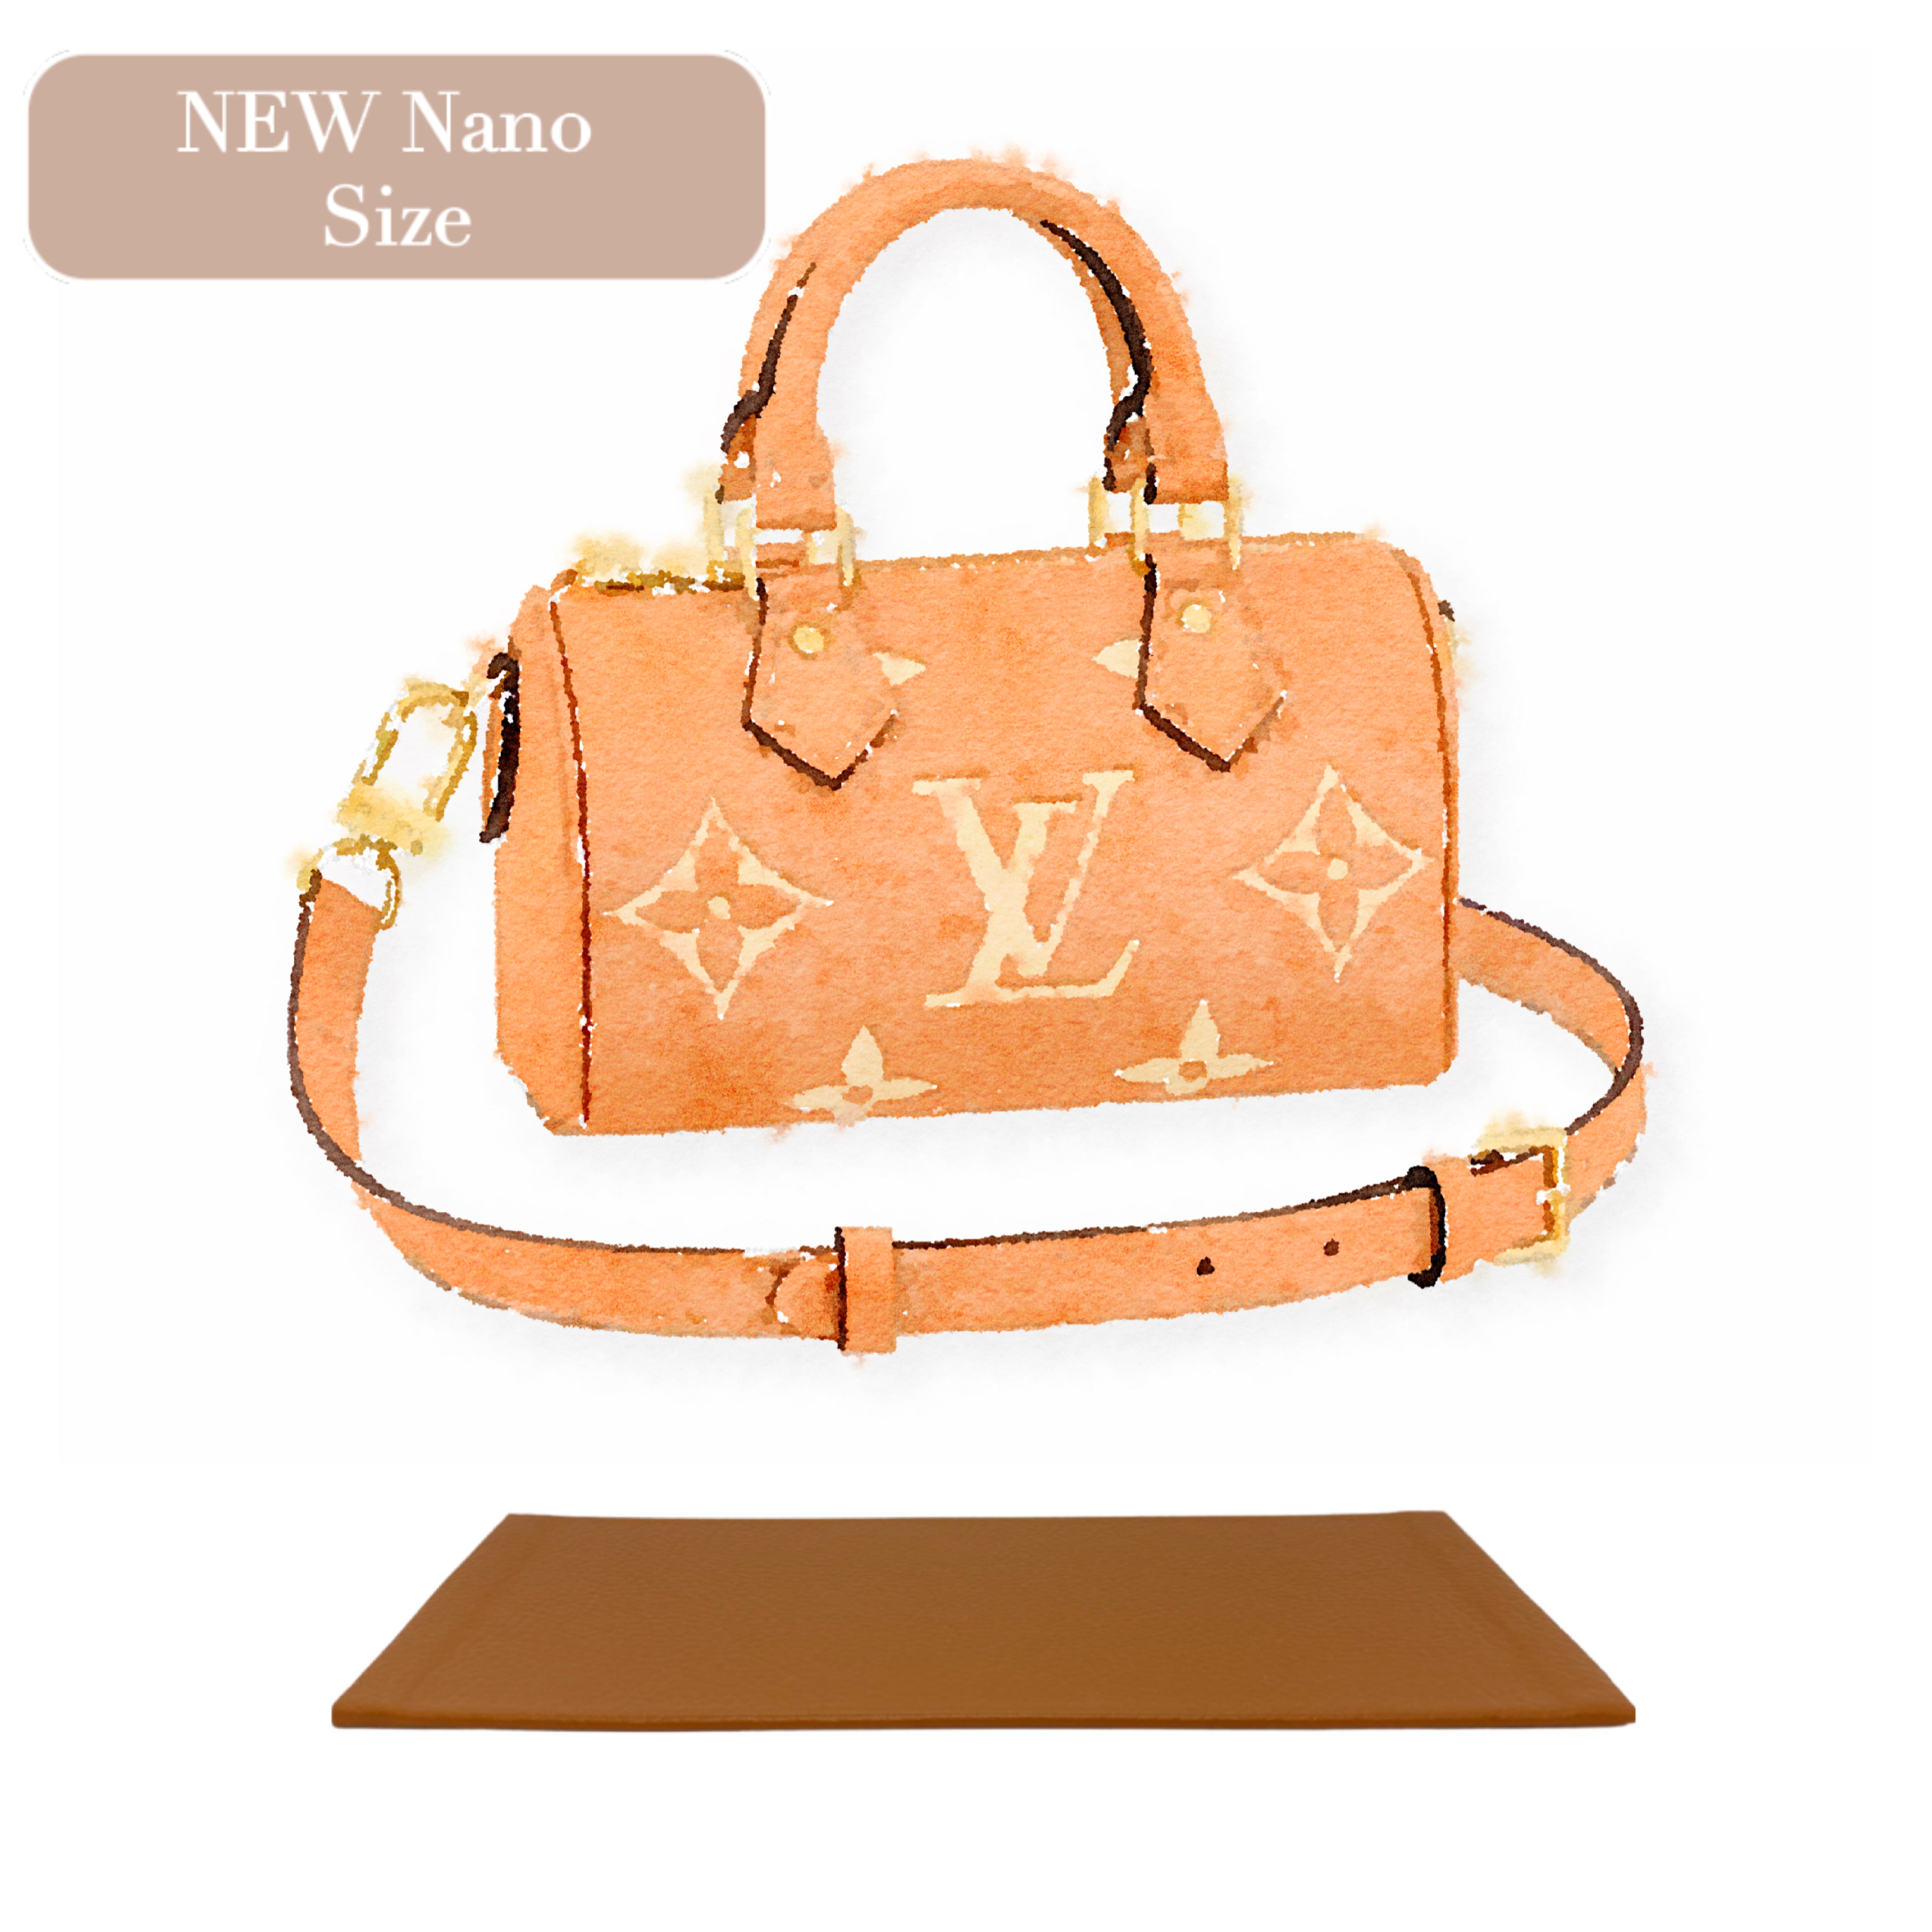 Louis Vuitton Nano Speedy Bag Review